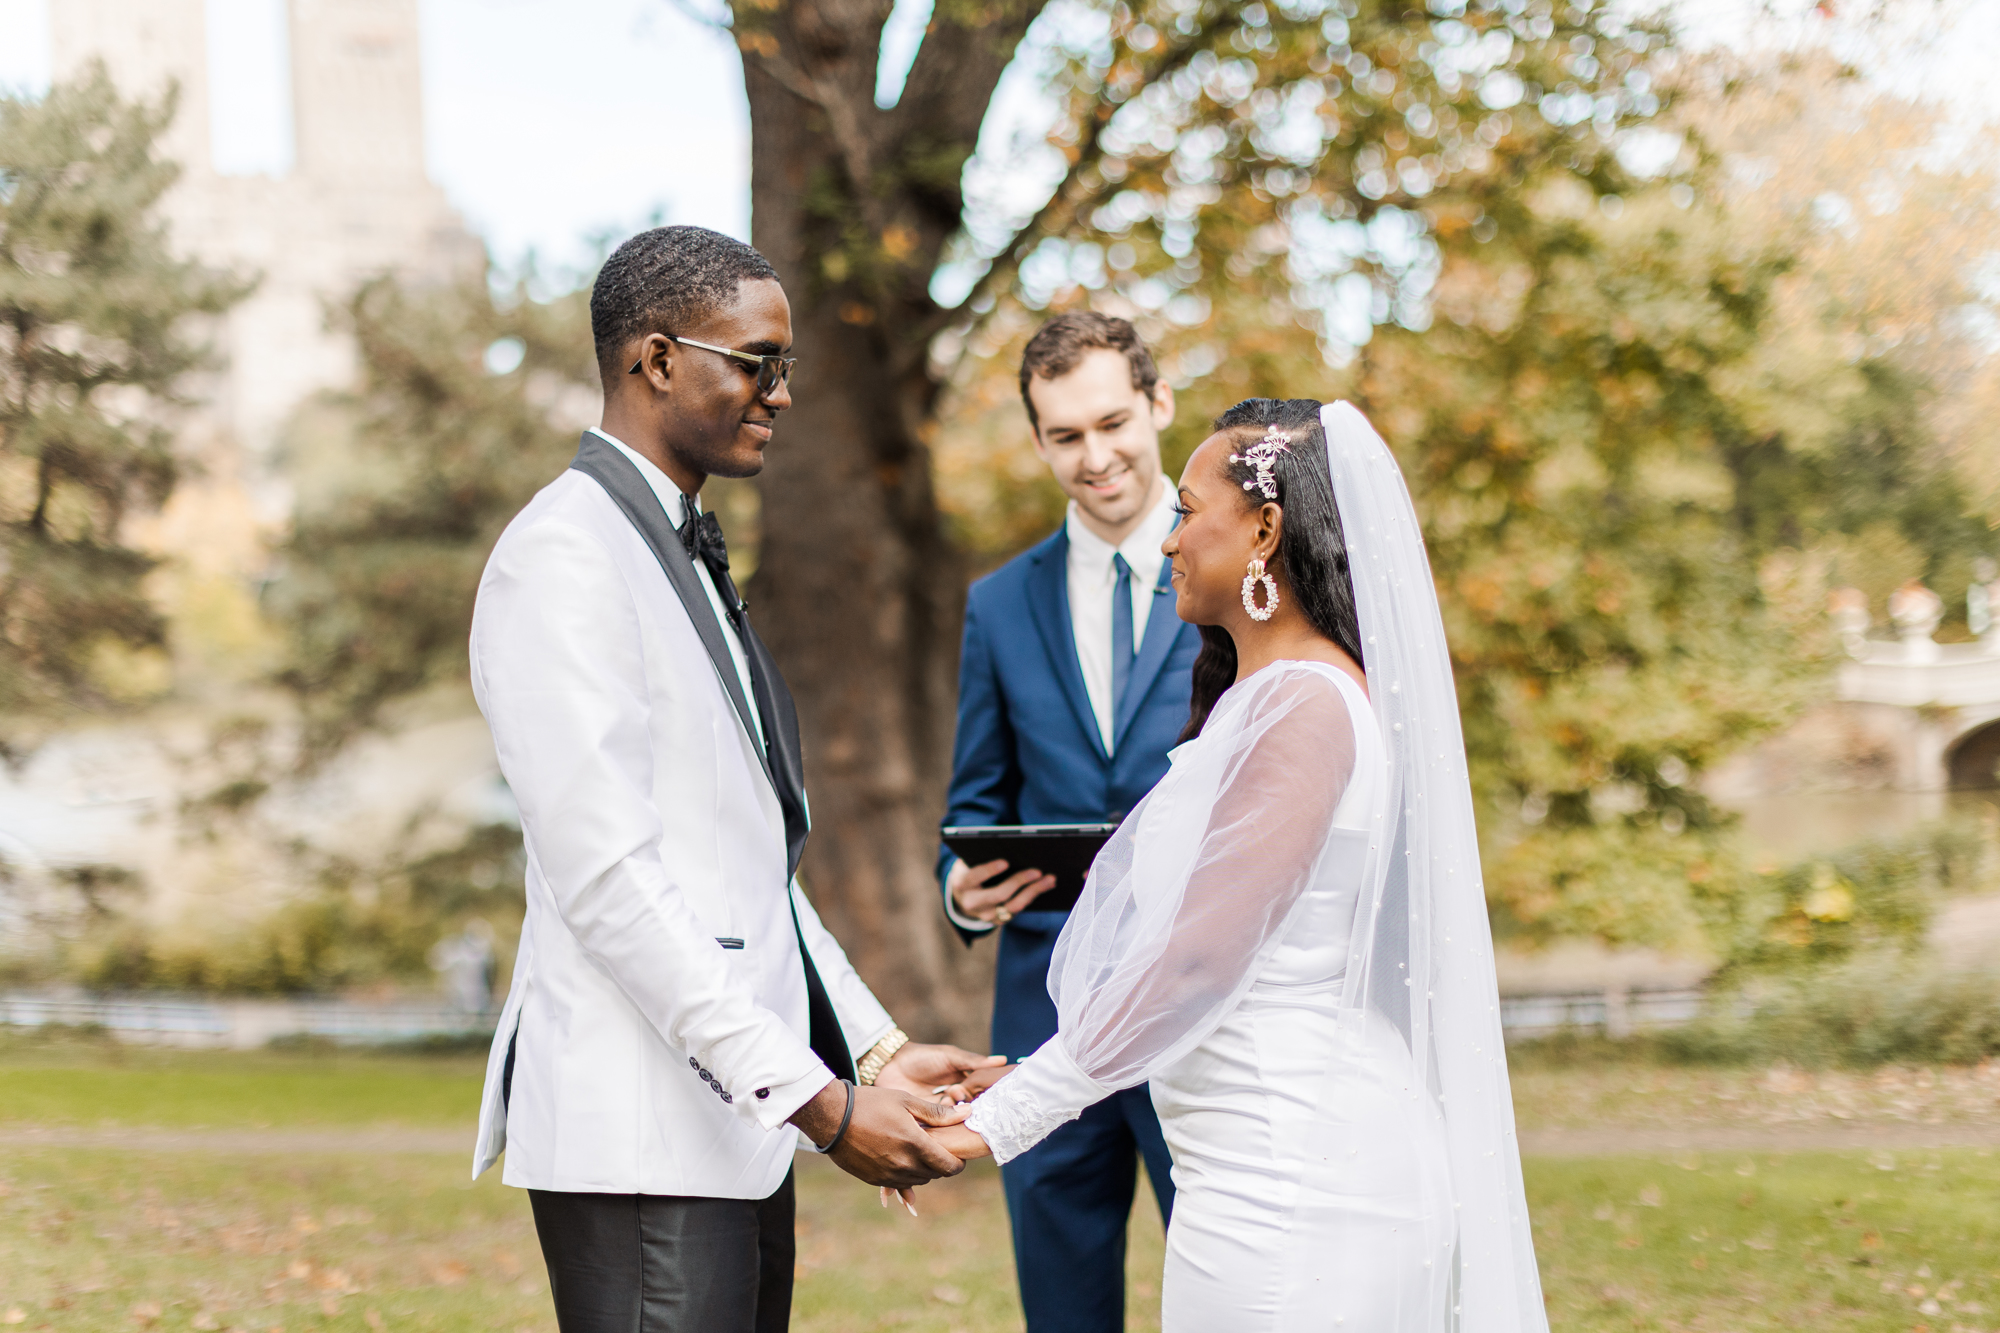 Spectacular Central Park Wedding Photos on Cherry Hill in Fall